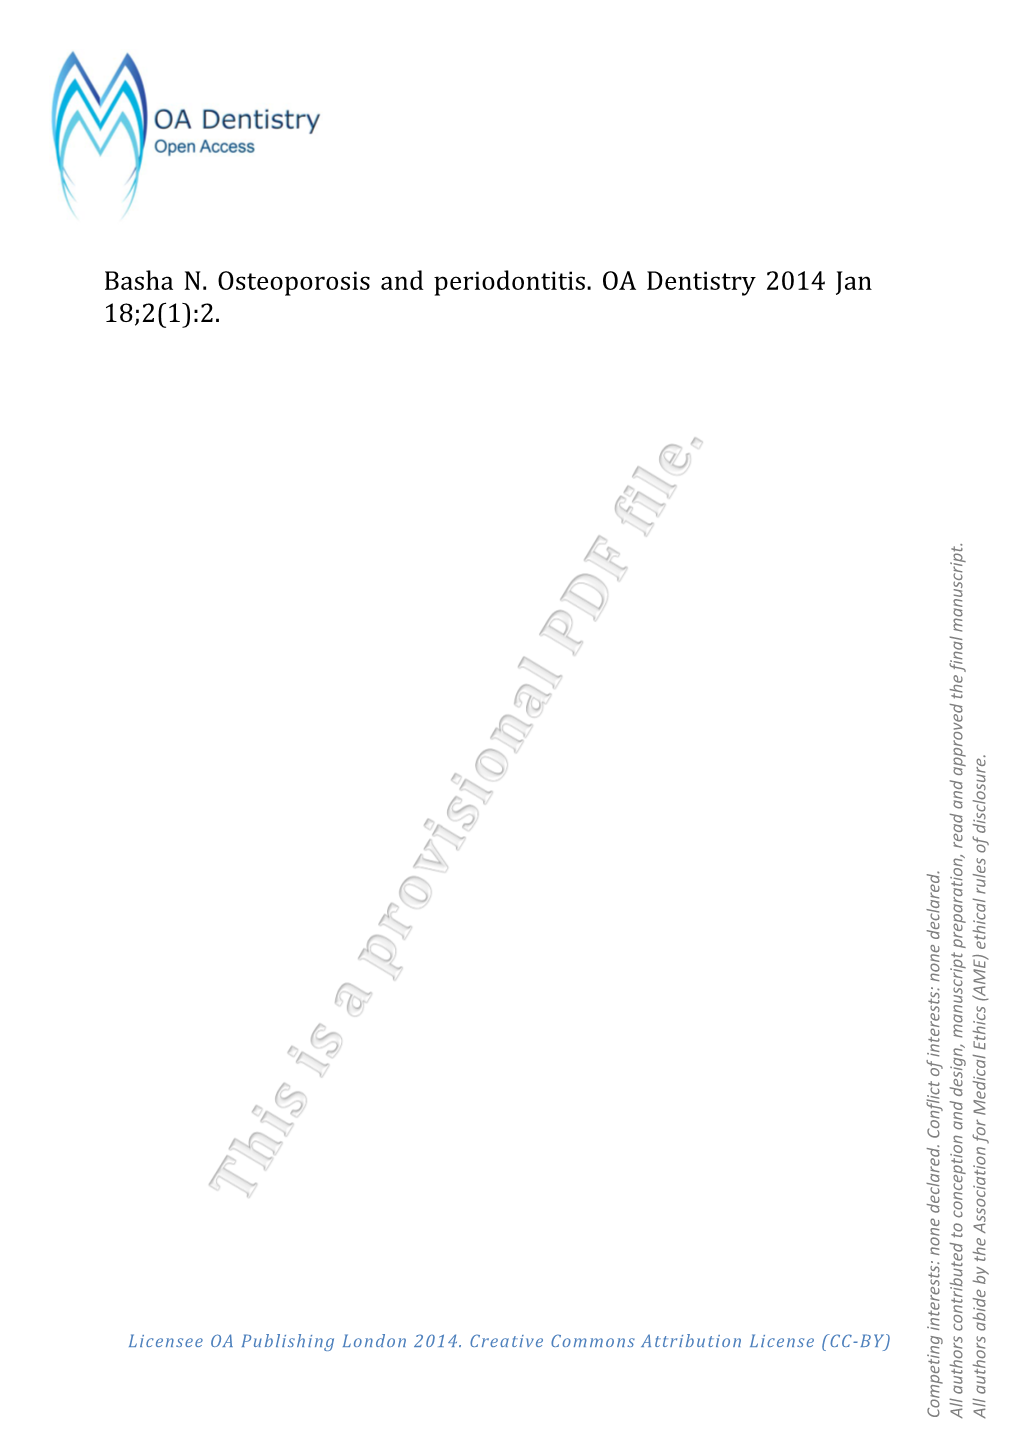 Basha N. Osteoporosis and Periodontitis. OA Dentistry 2014 Jan 18;2(1):2